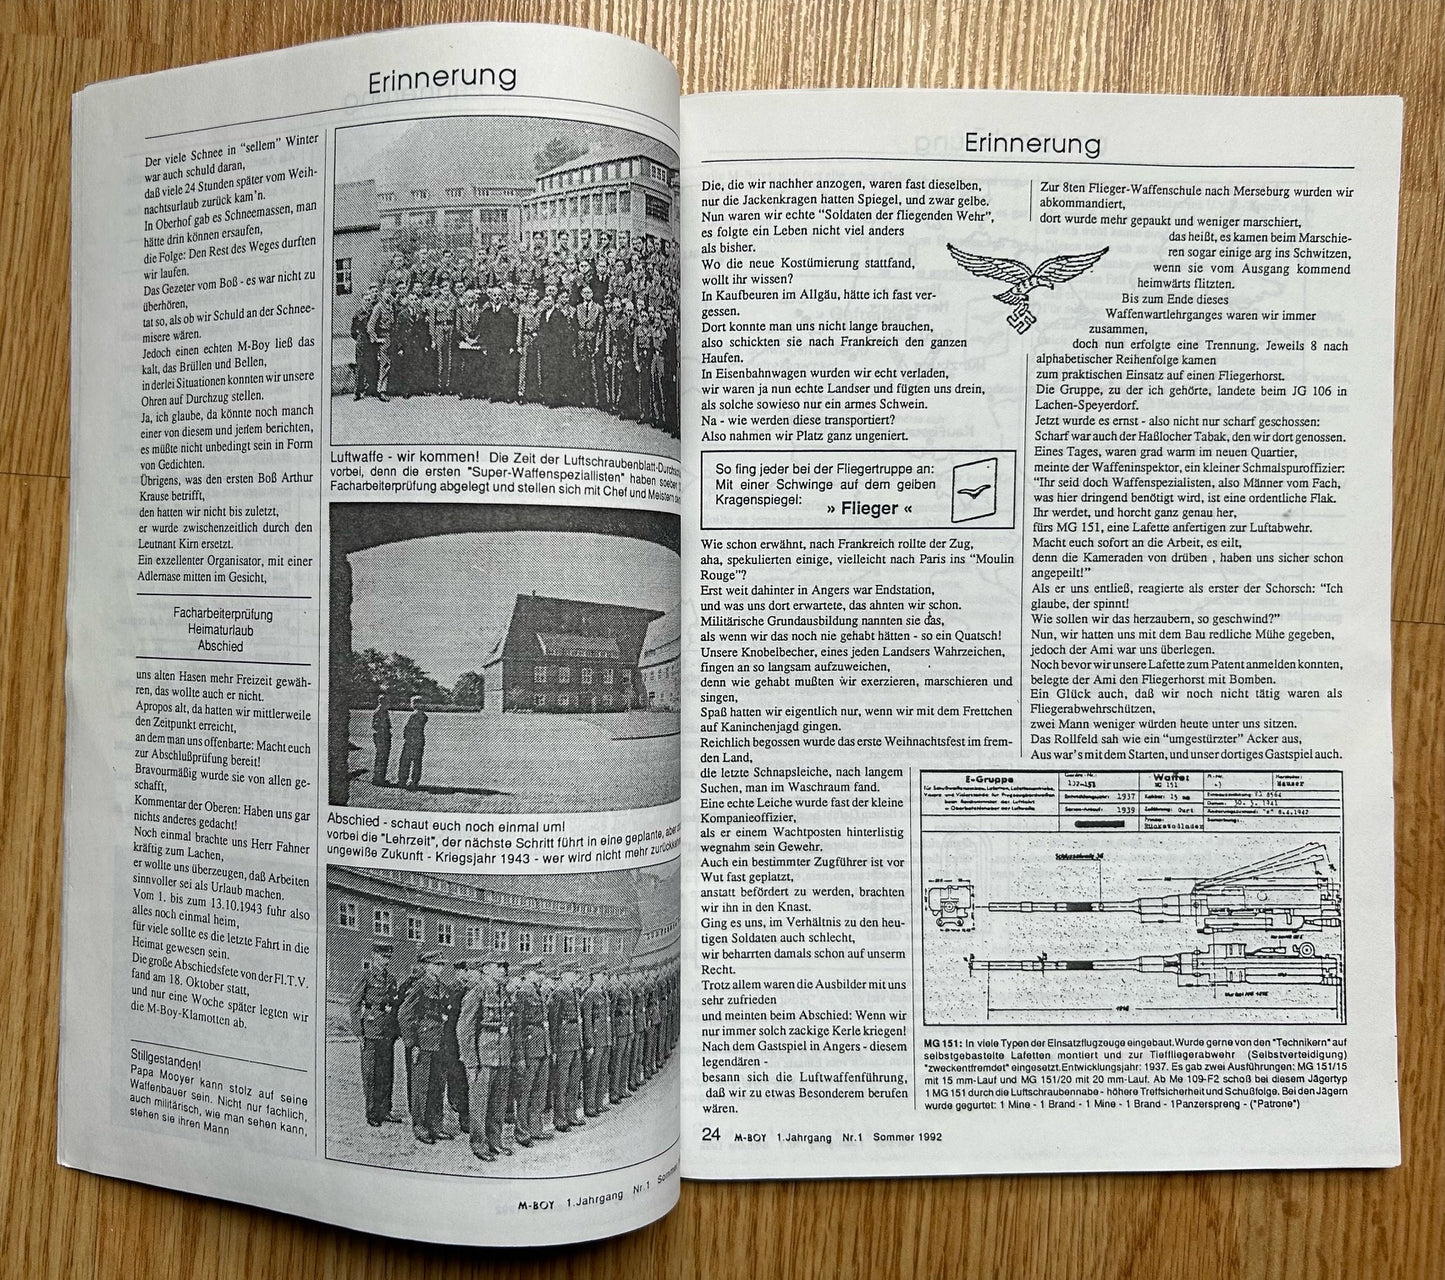 Luftwaffe Flieger technische Vorschule Suhl - commemorative grouping